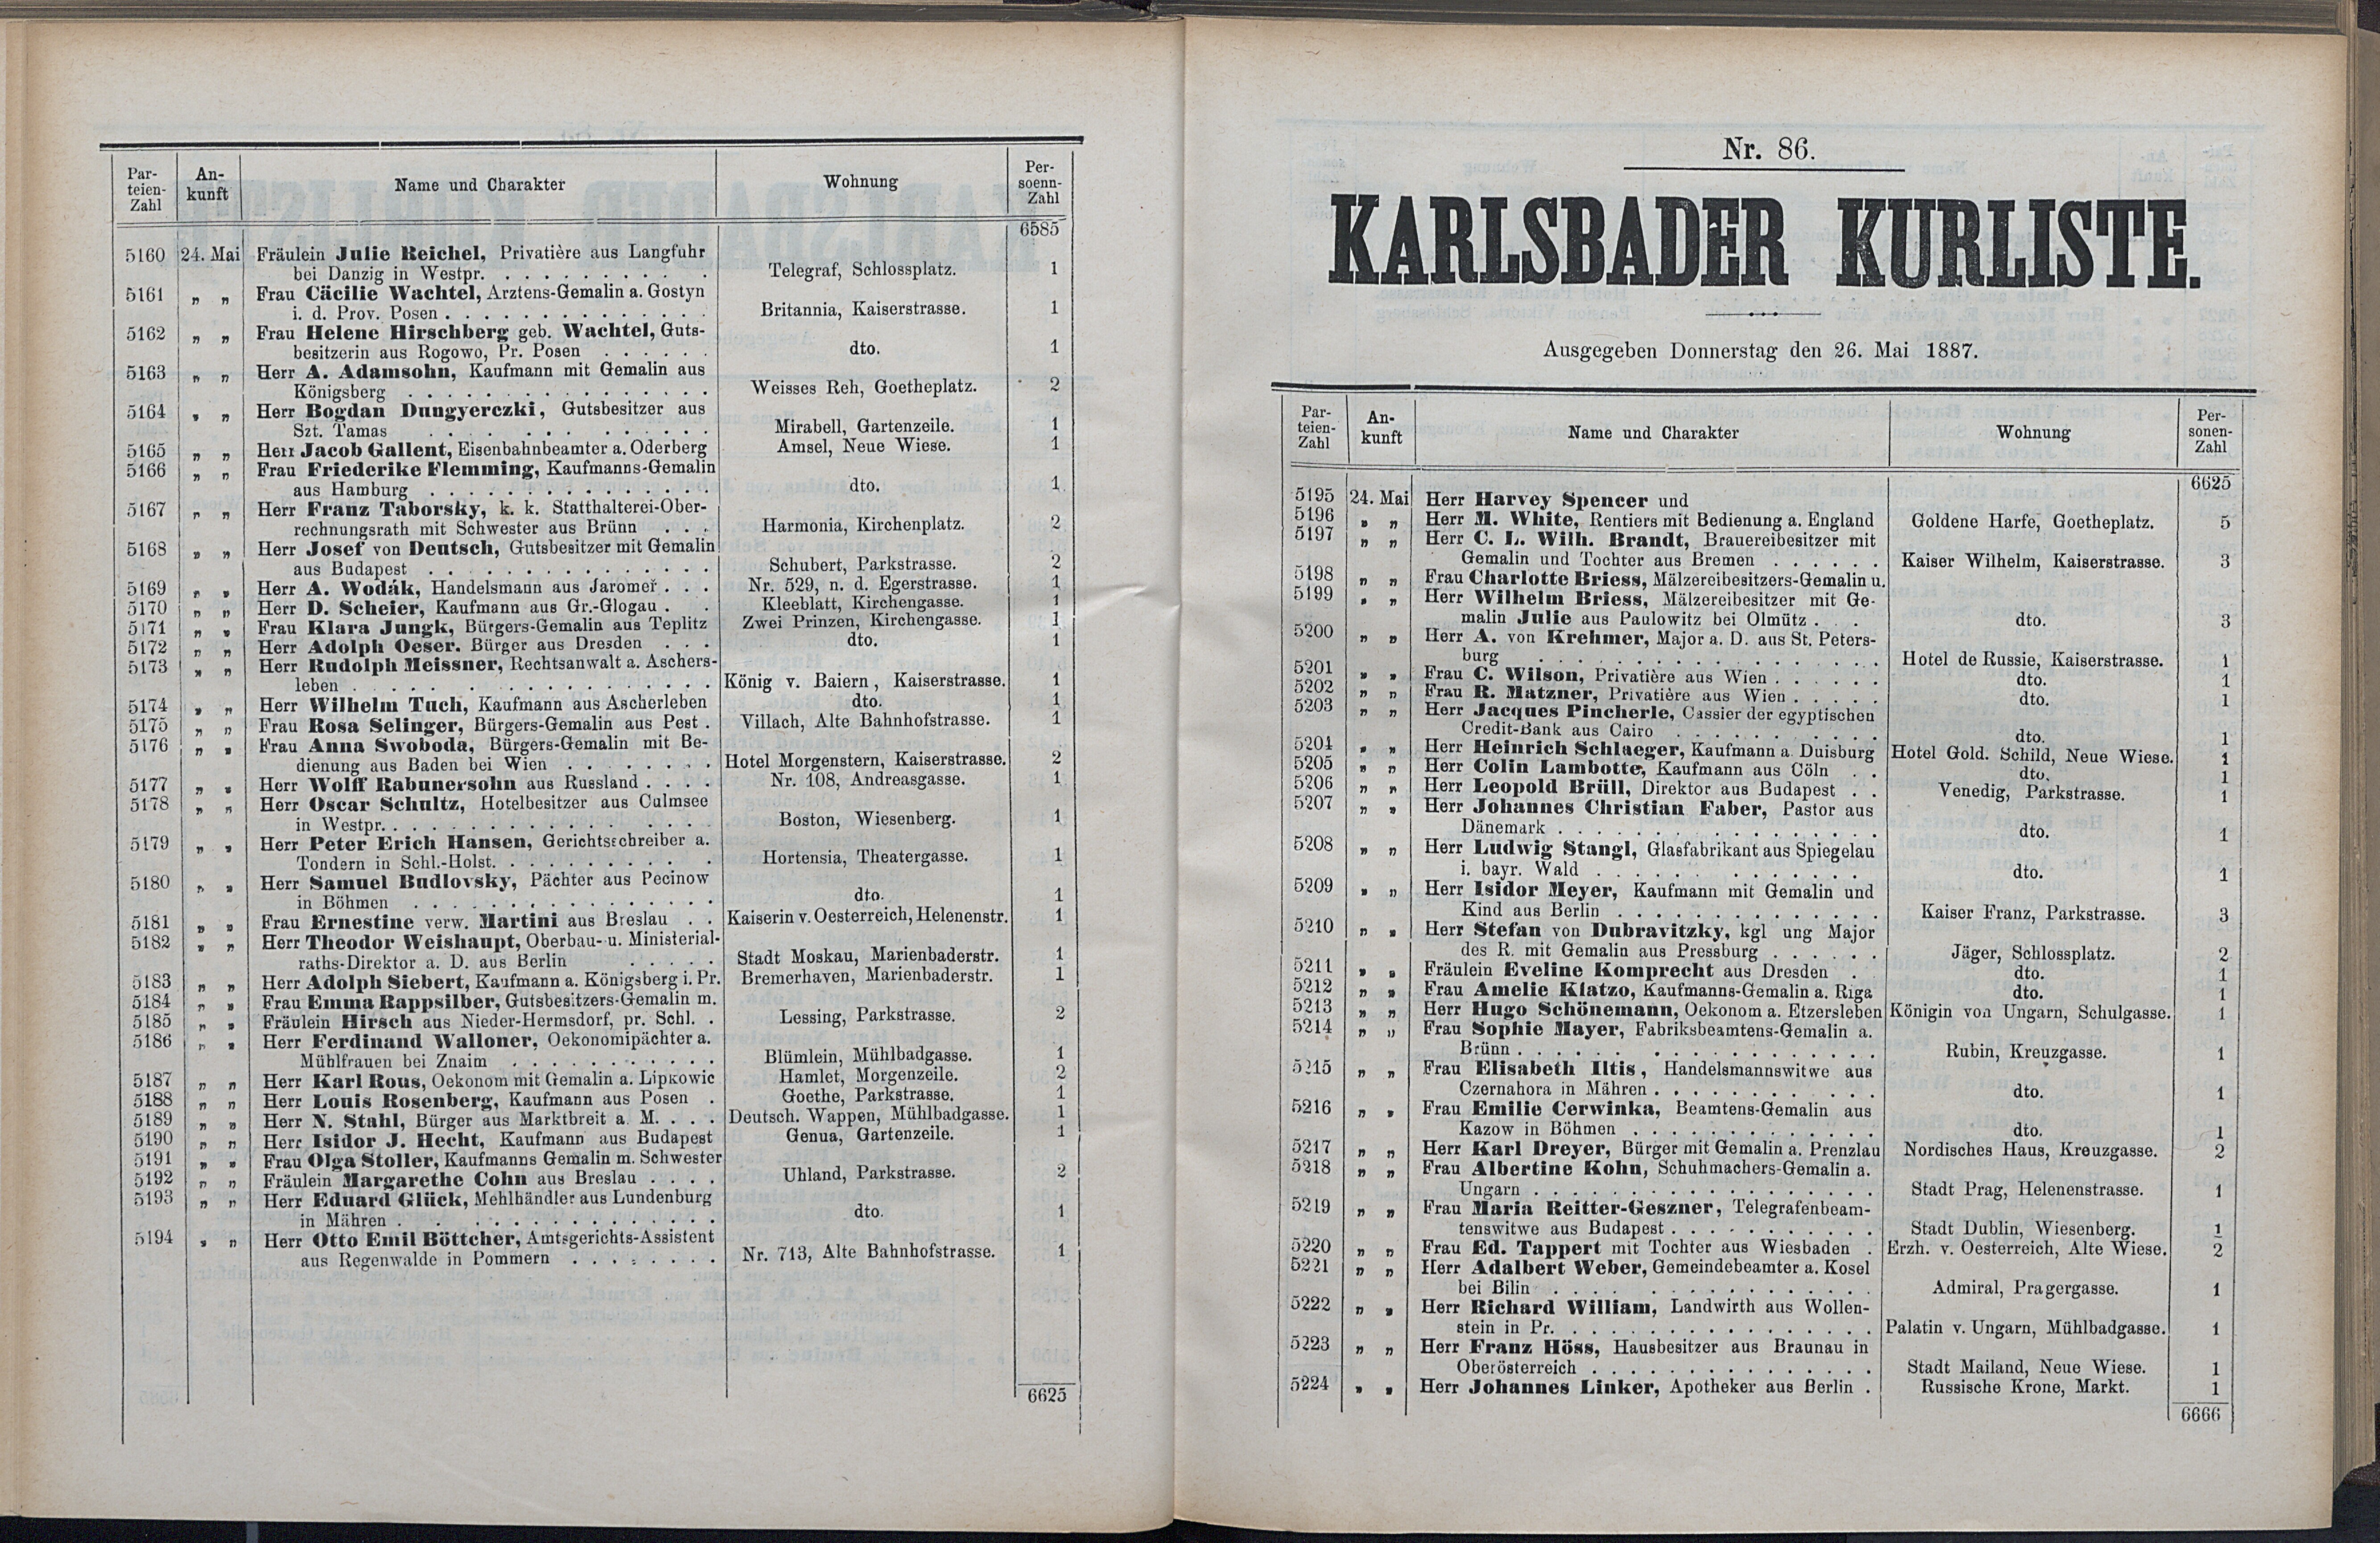 139. soap-kv_knihovna_karlsbader-kurliste-1887_1400